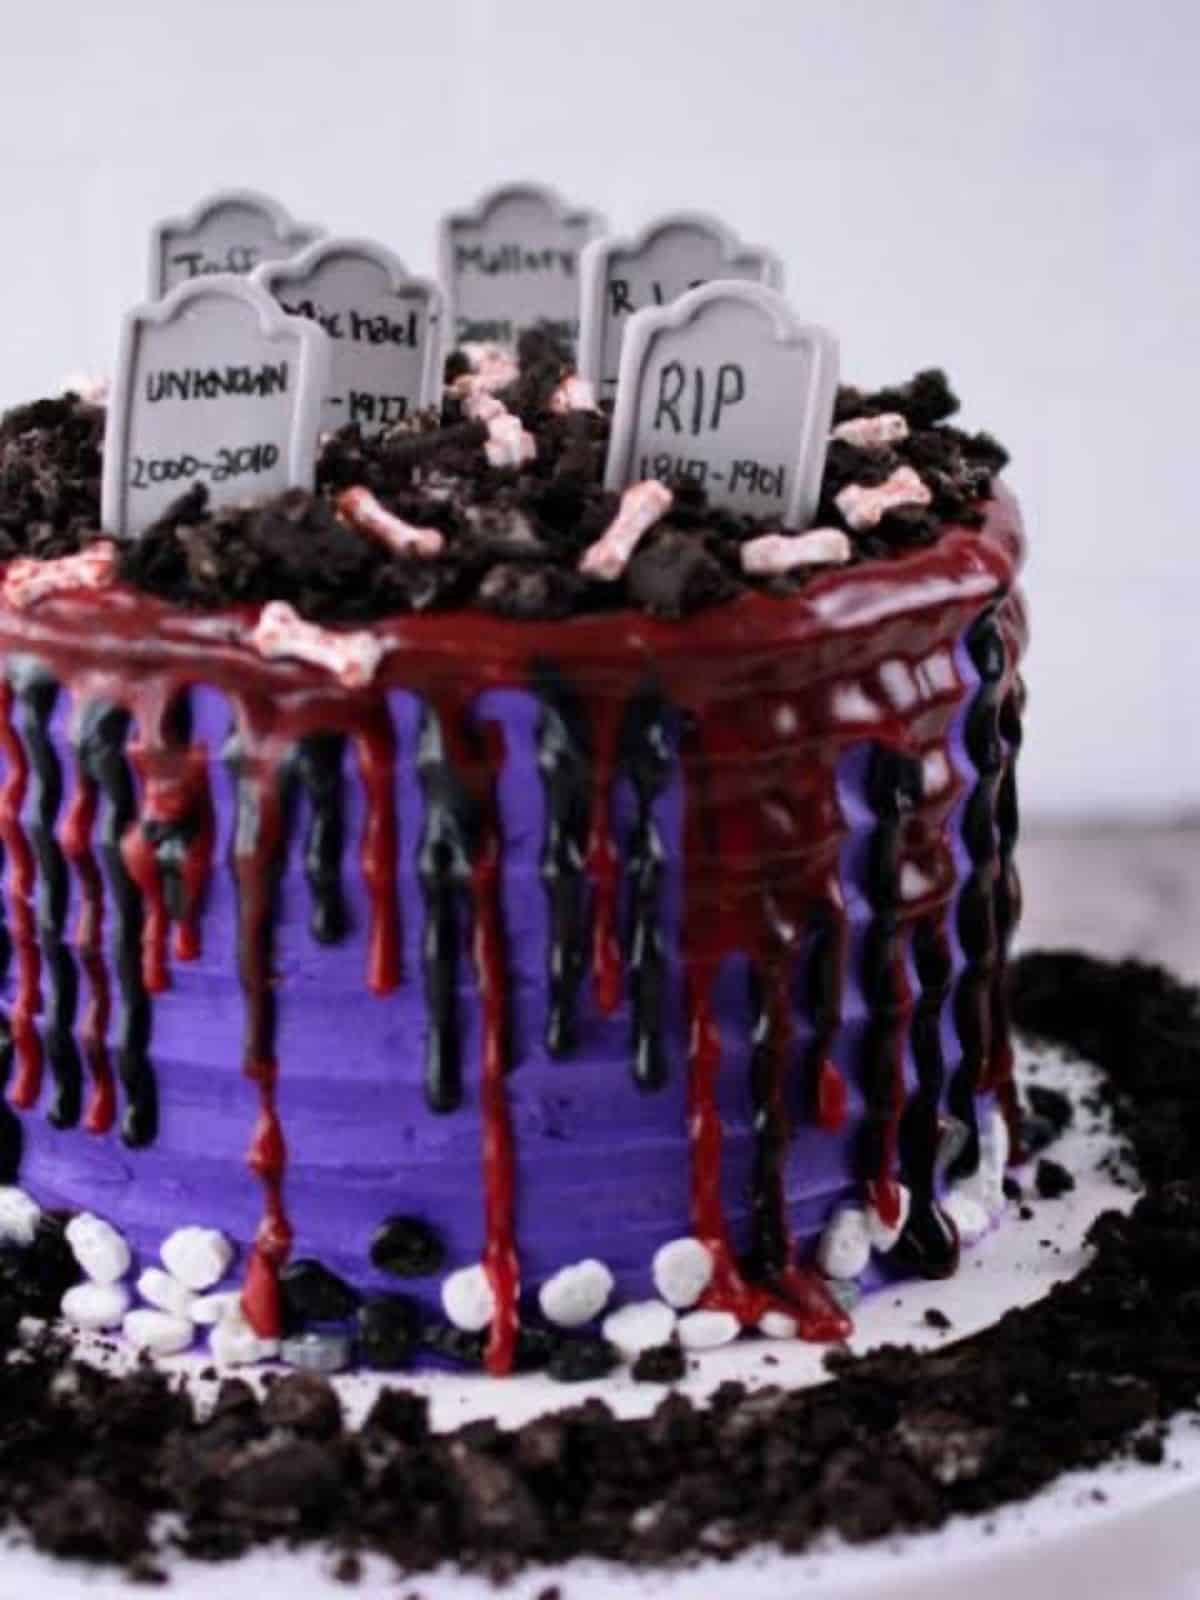 Graveyard themed cake.